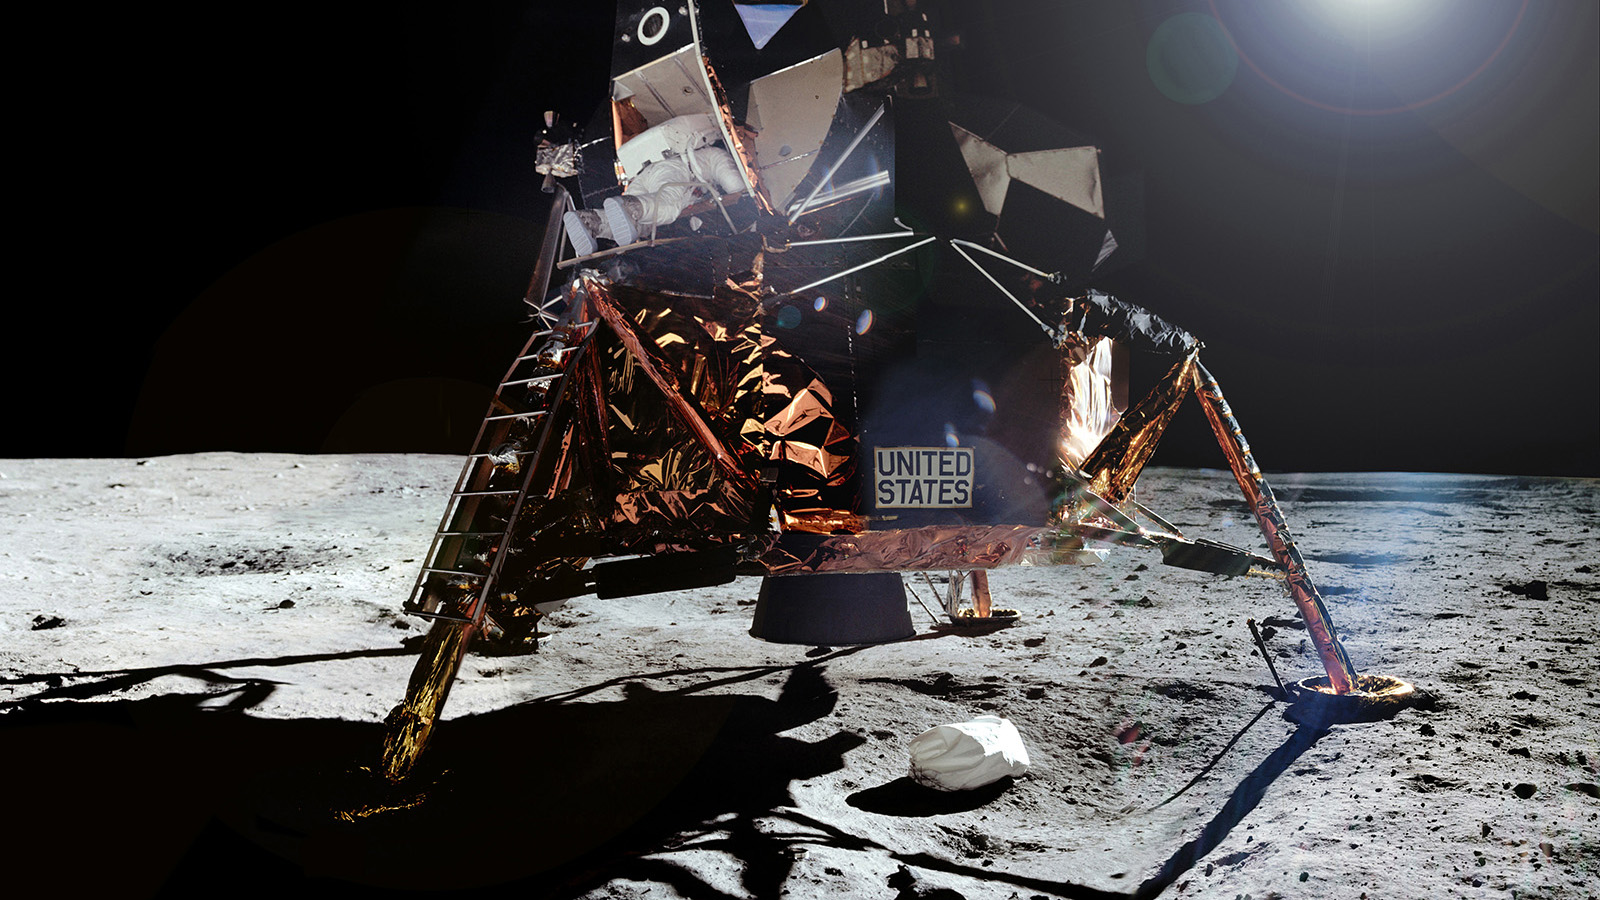 Lunar lander with astronaut emerging.